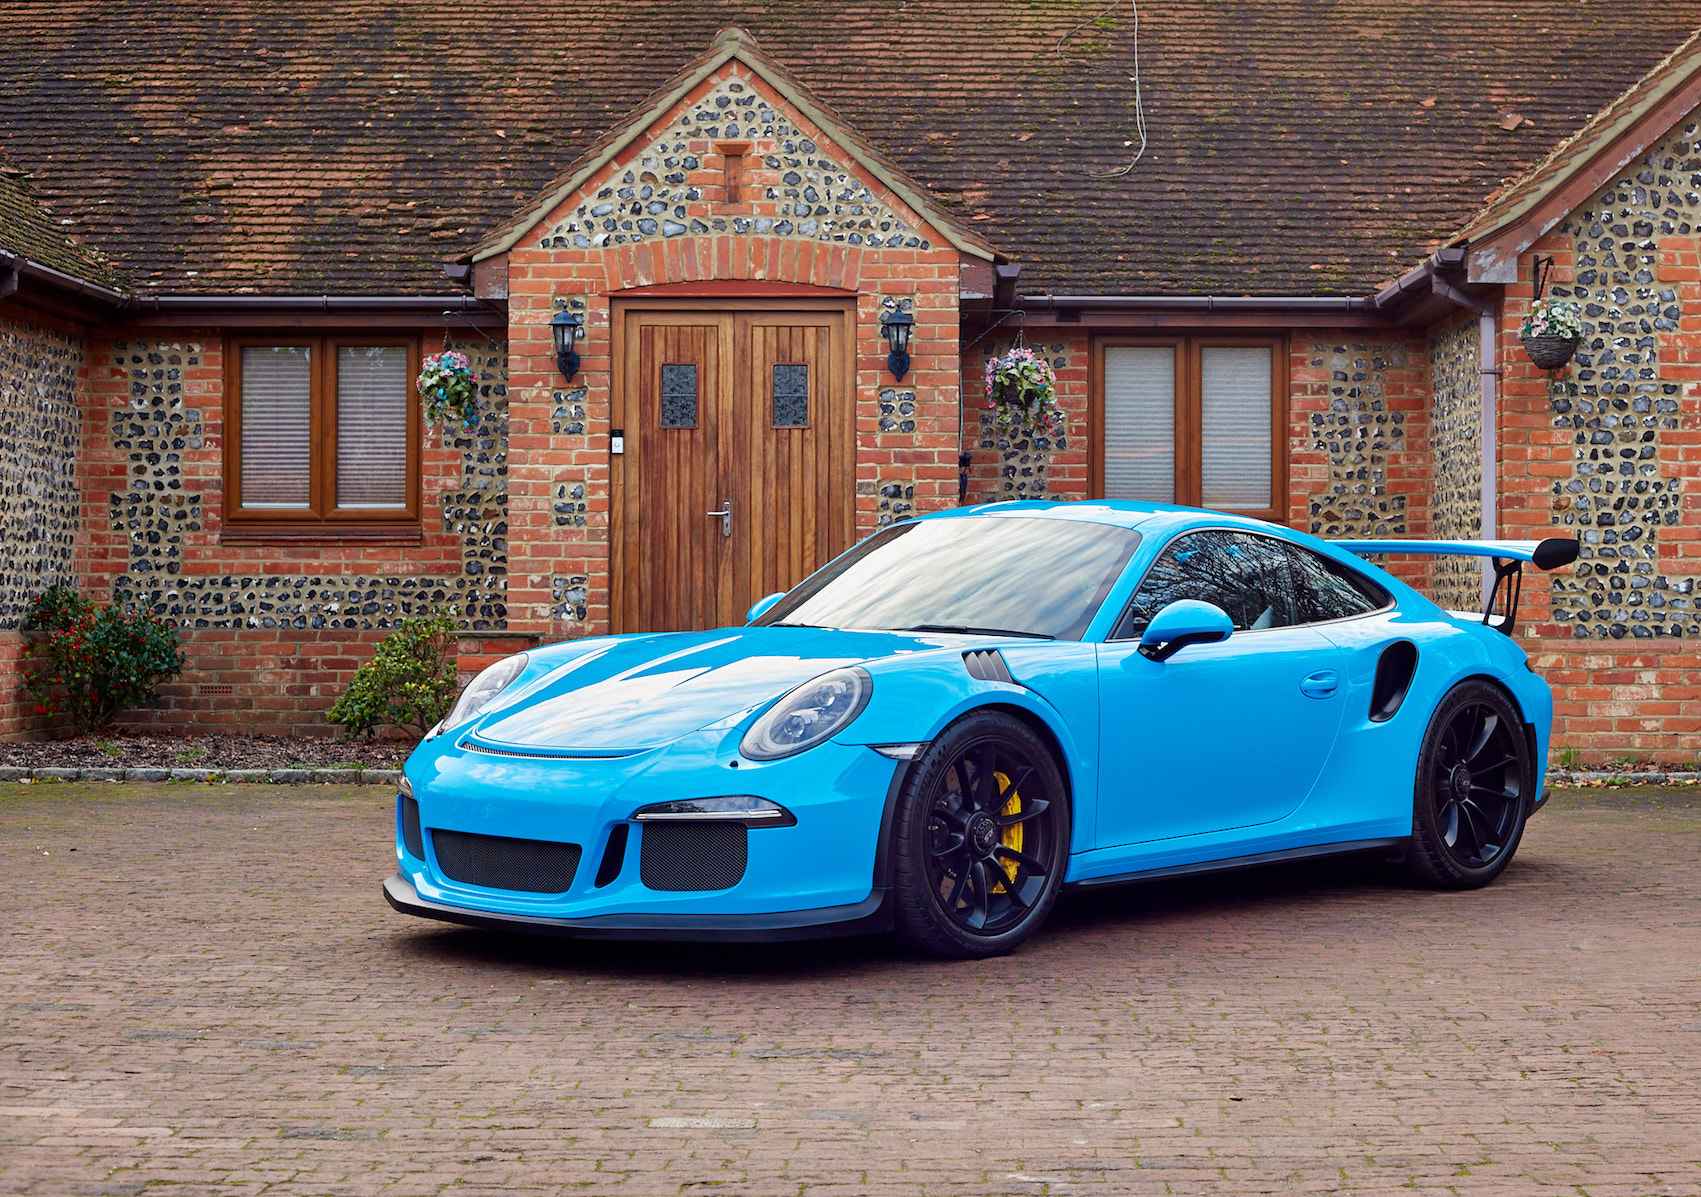 Porsche 991 GT3 RS Riviera Blue for sale with Redline Engineering UK